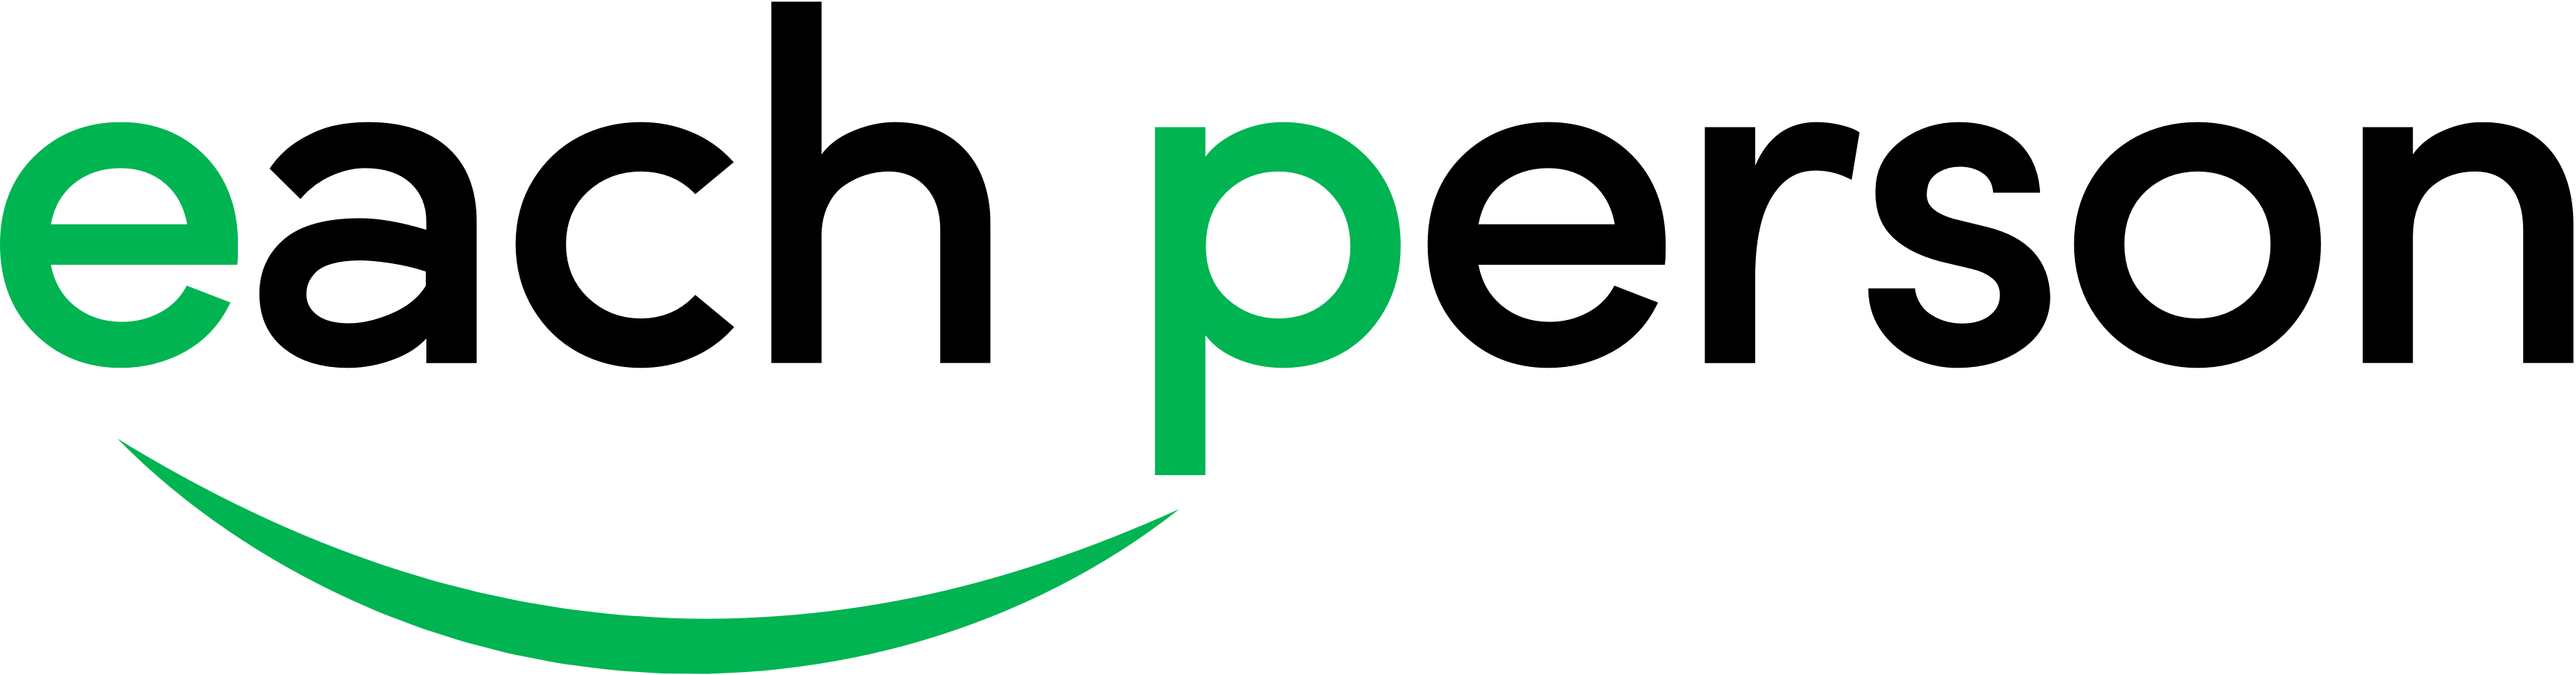 epoints_logo